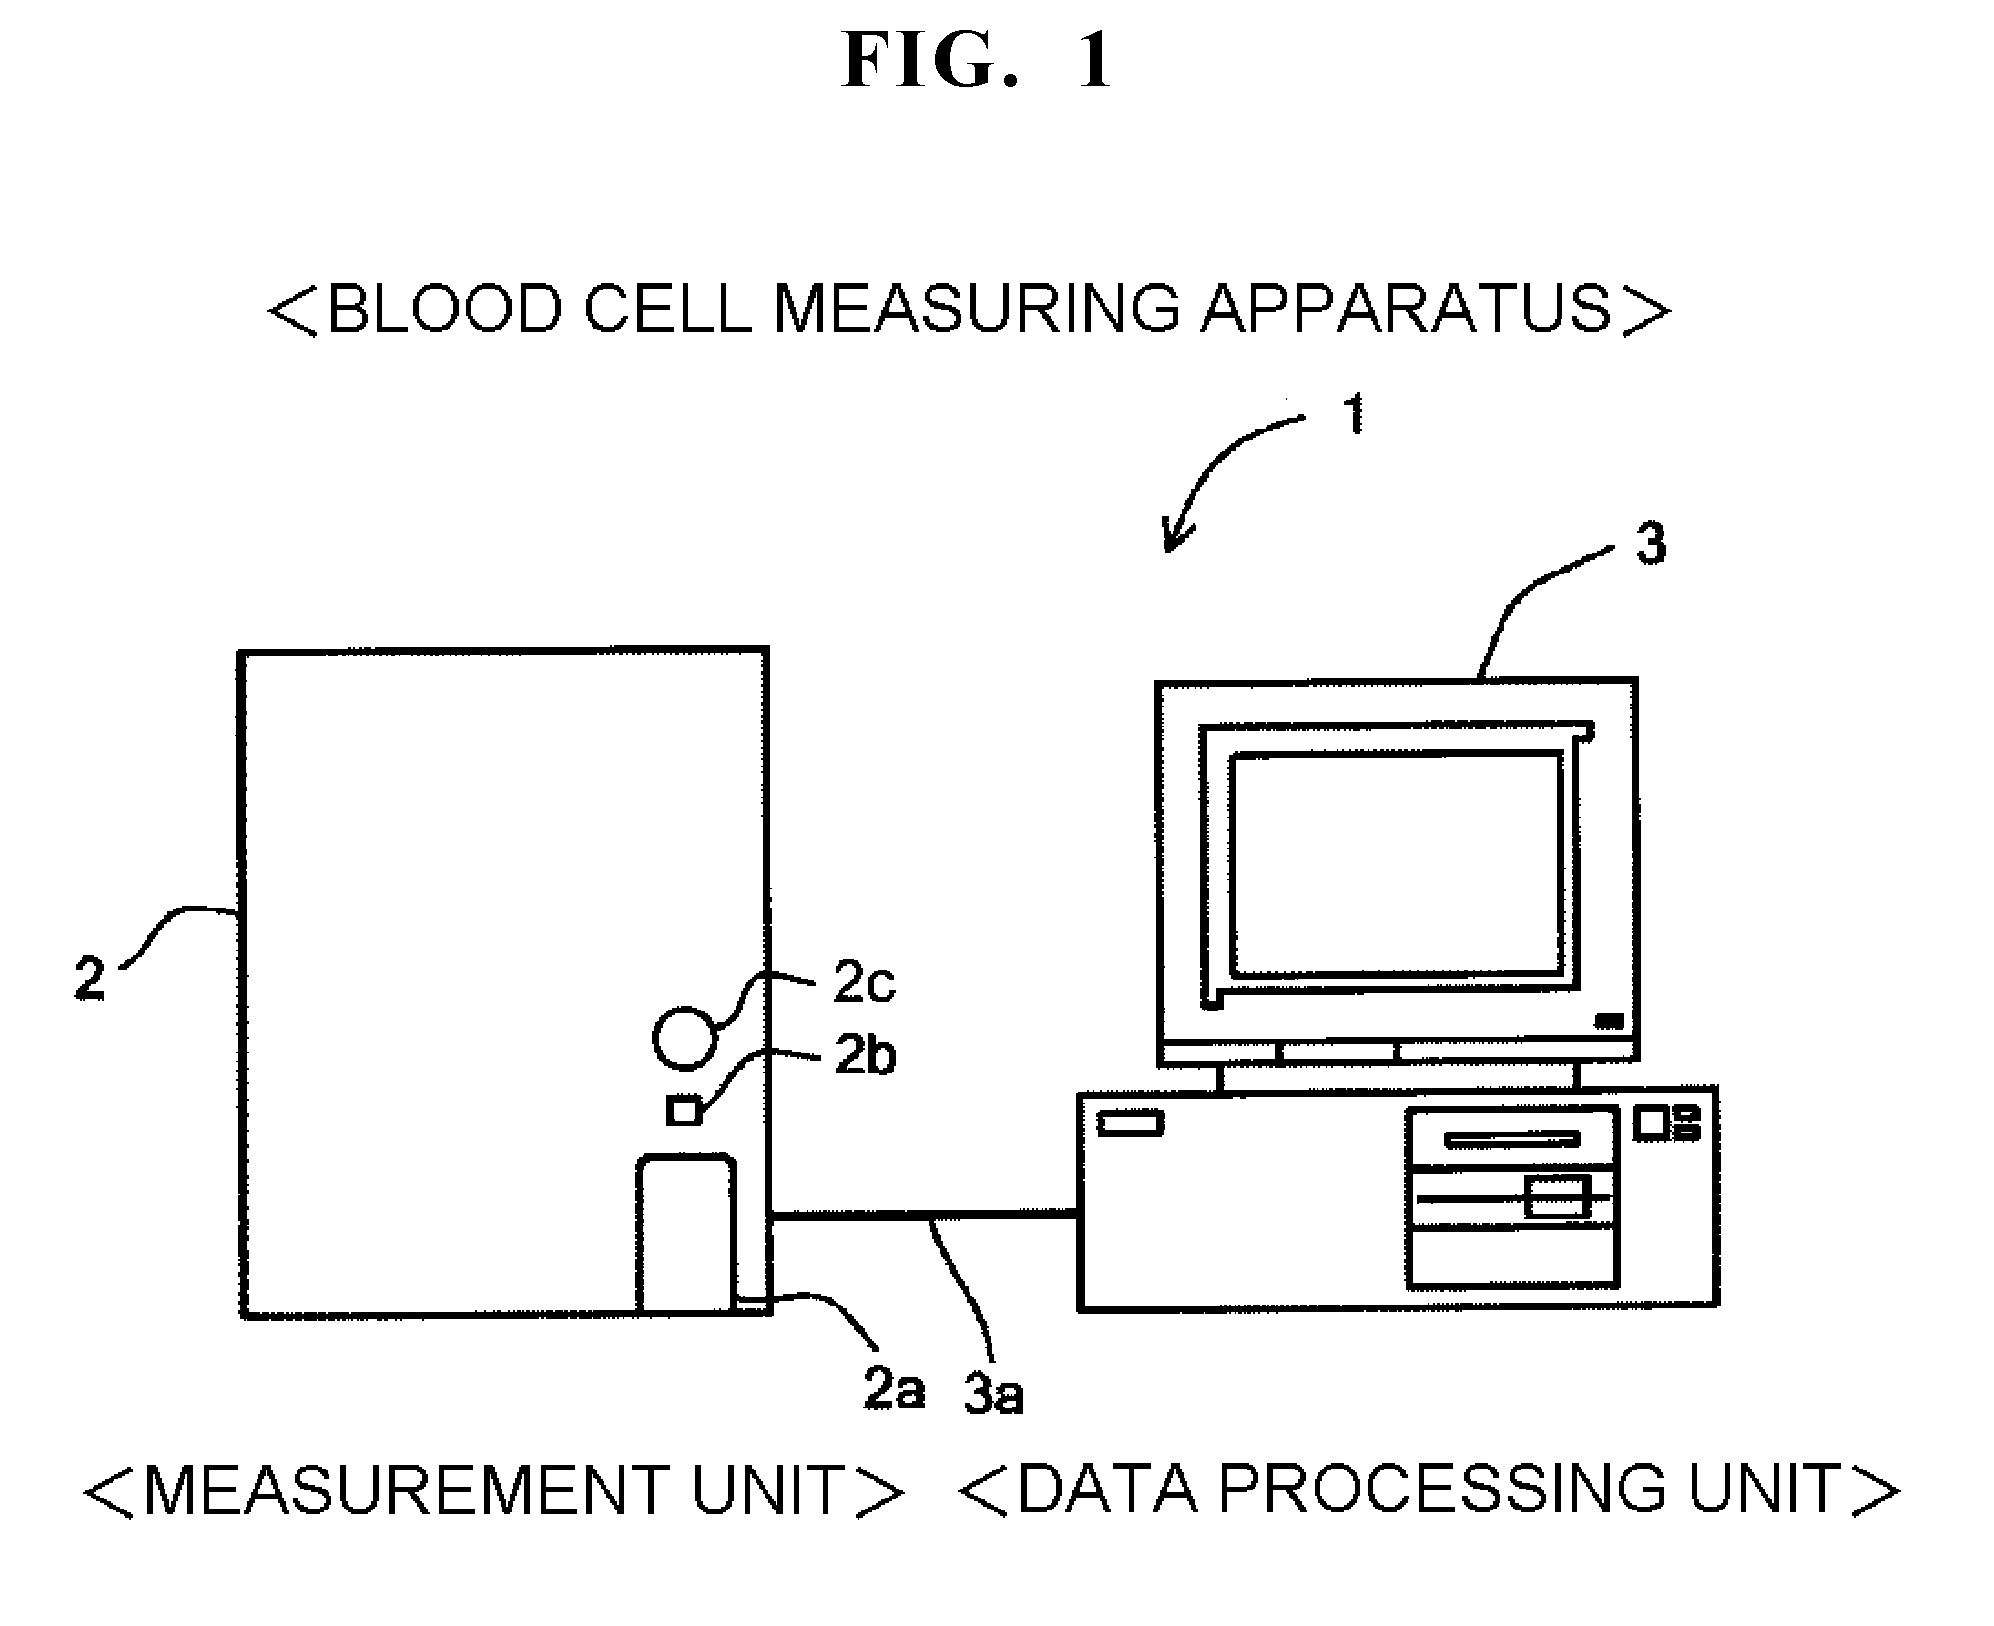 Animal blood cell measuring apparatus